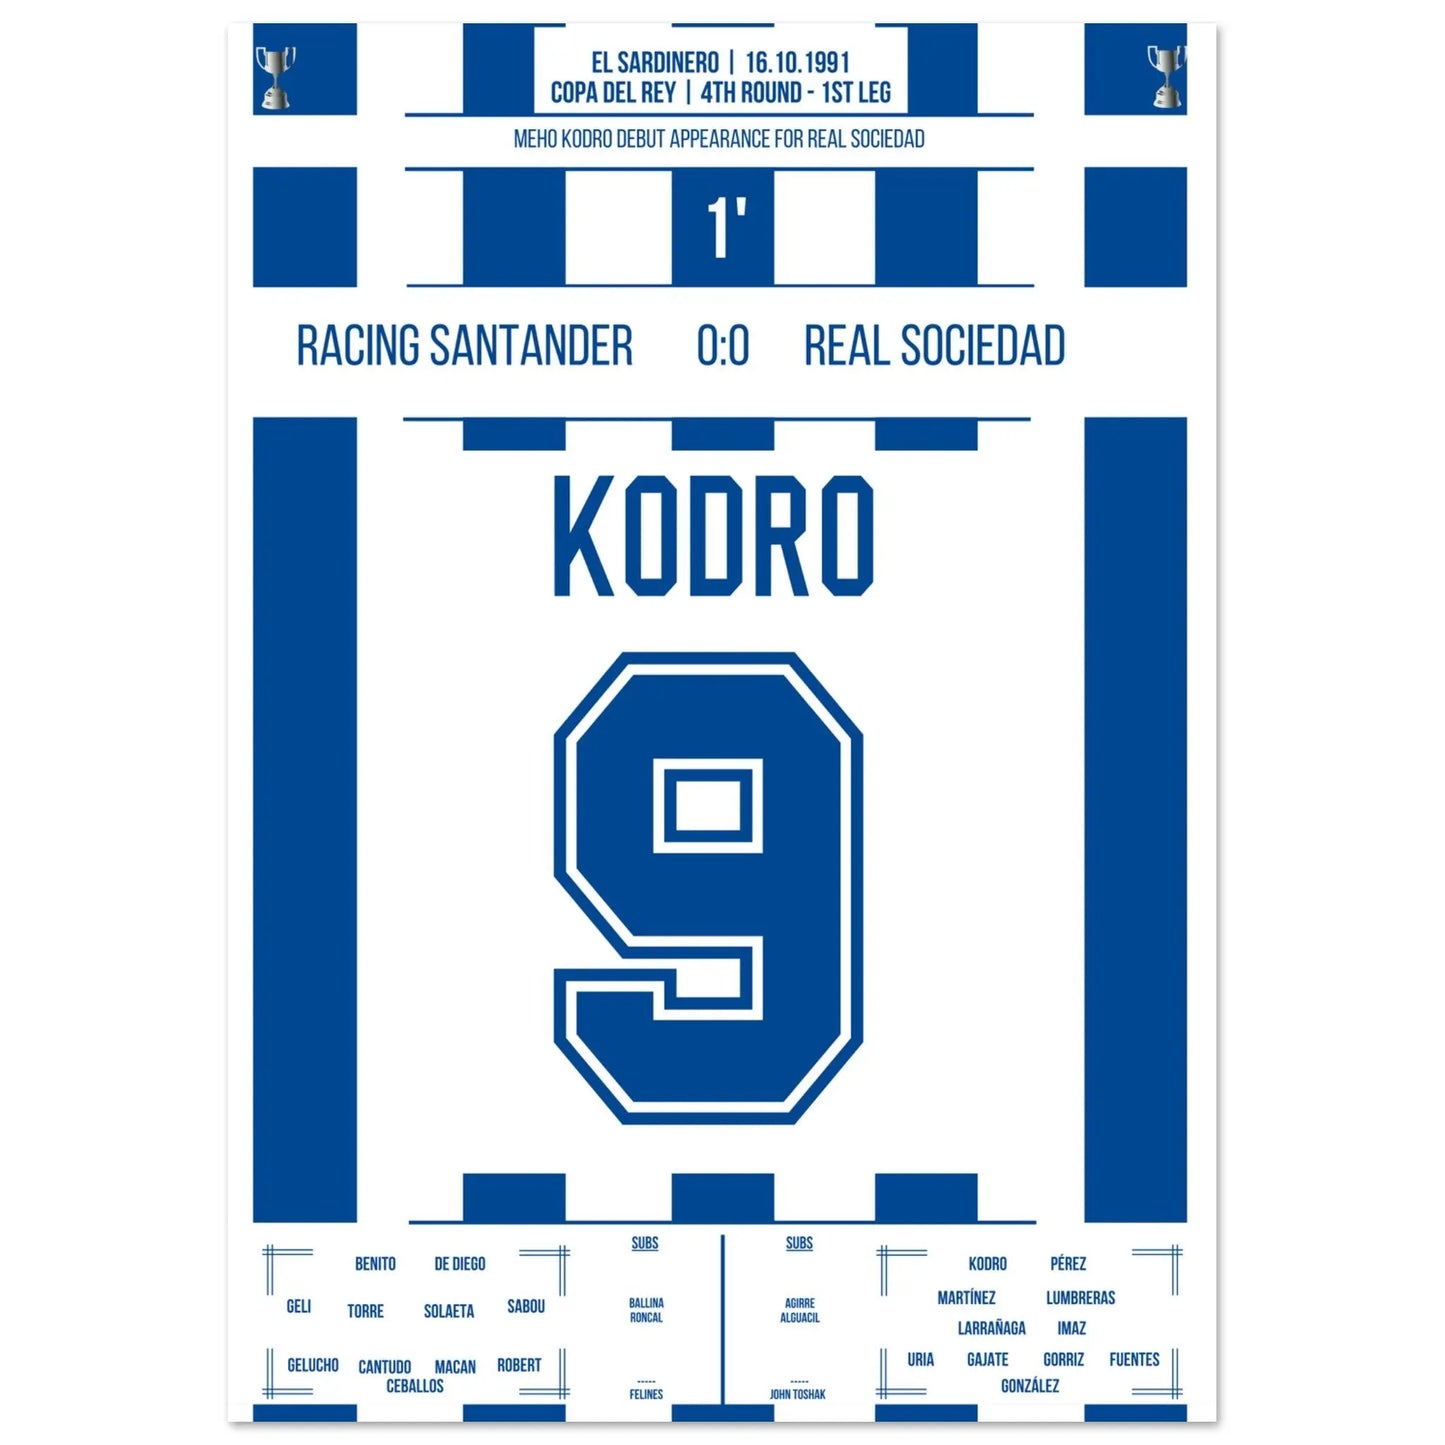 Meho Kodro debuts for Real Sociedad